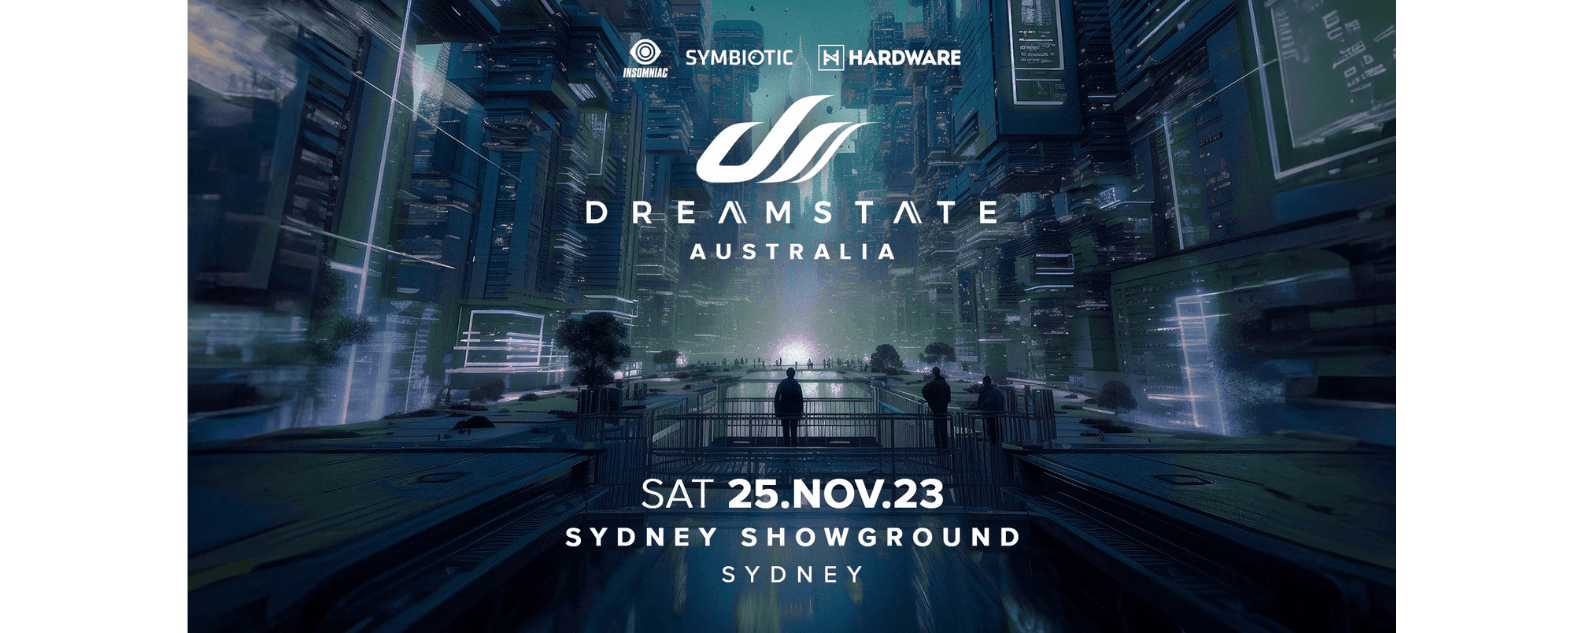 Dreamstate Sydney 2023 at Dreamstate Australia (Sydney) - Saturday